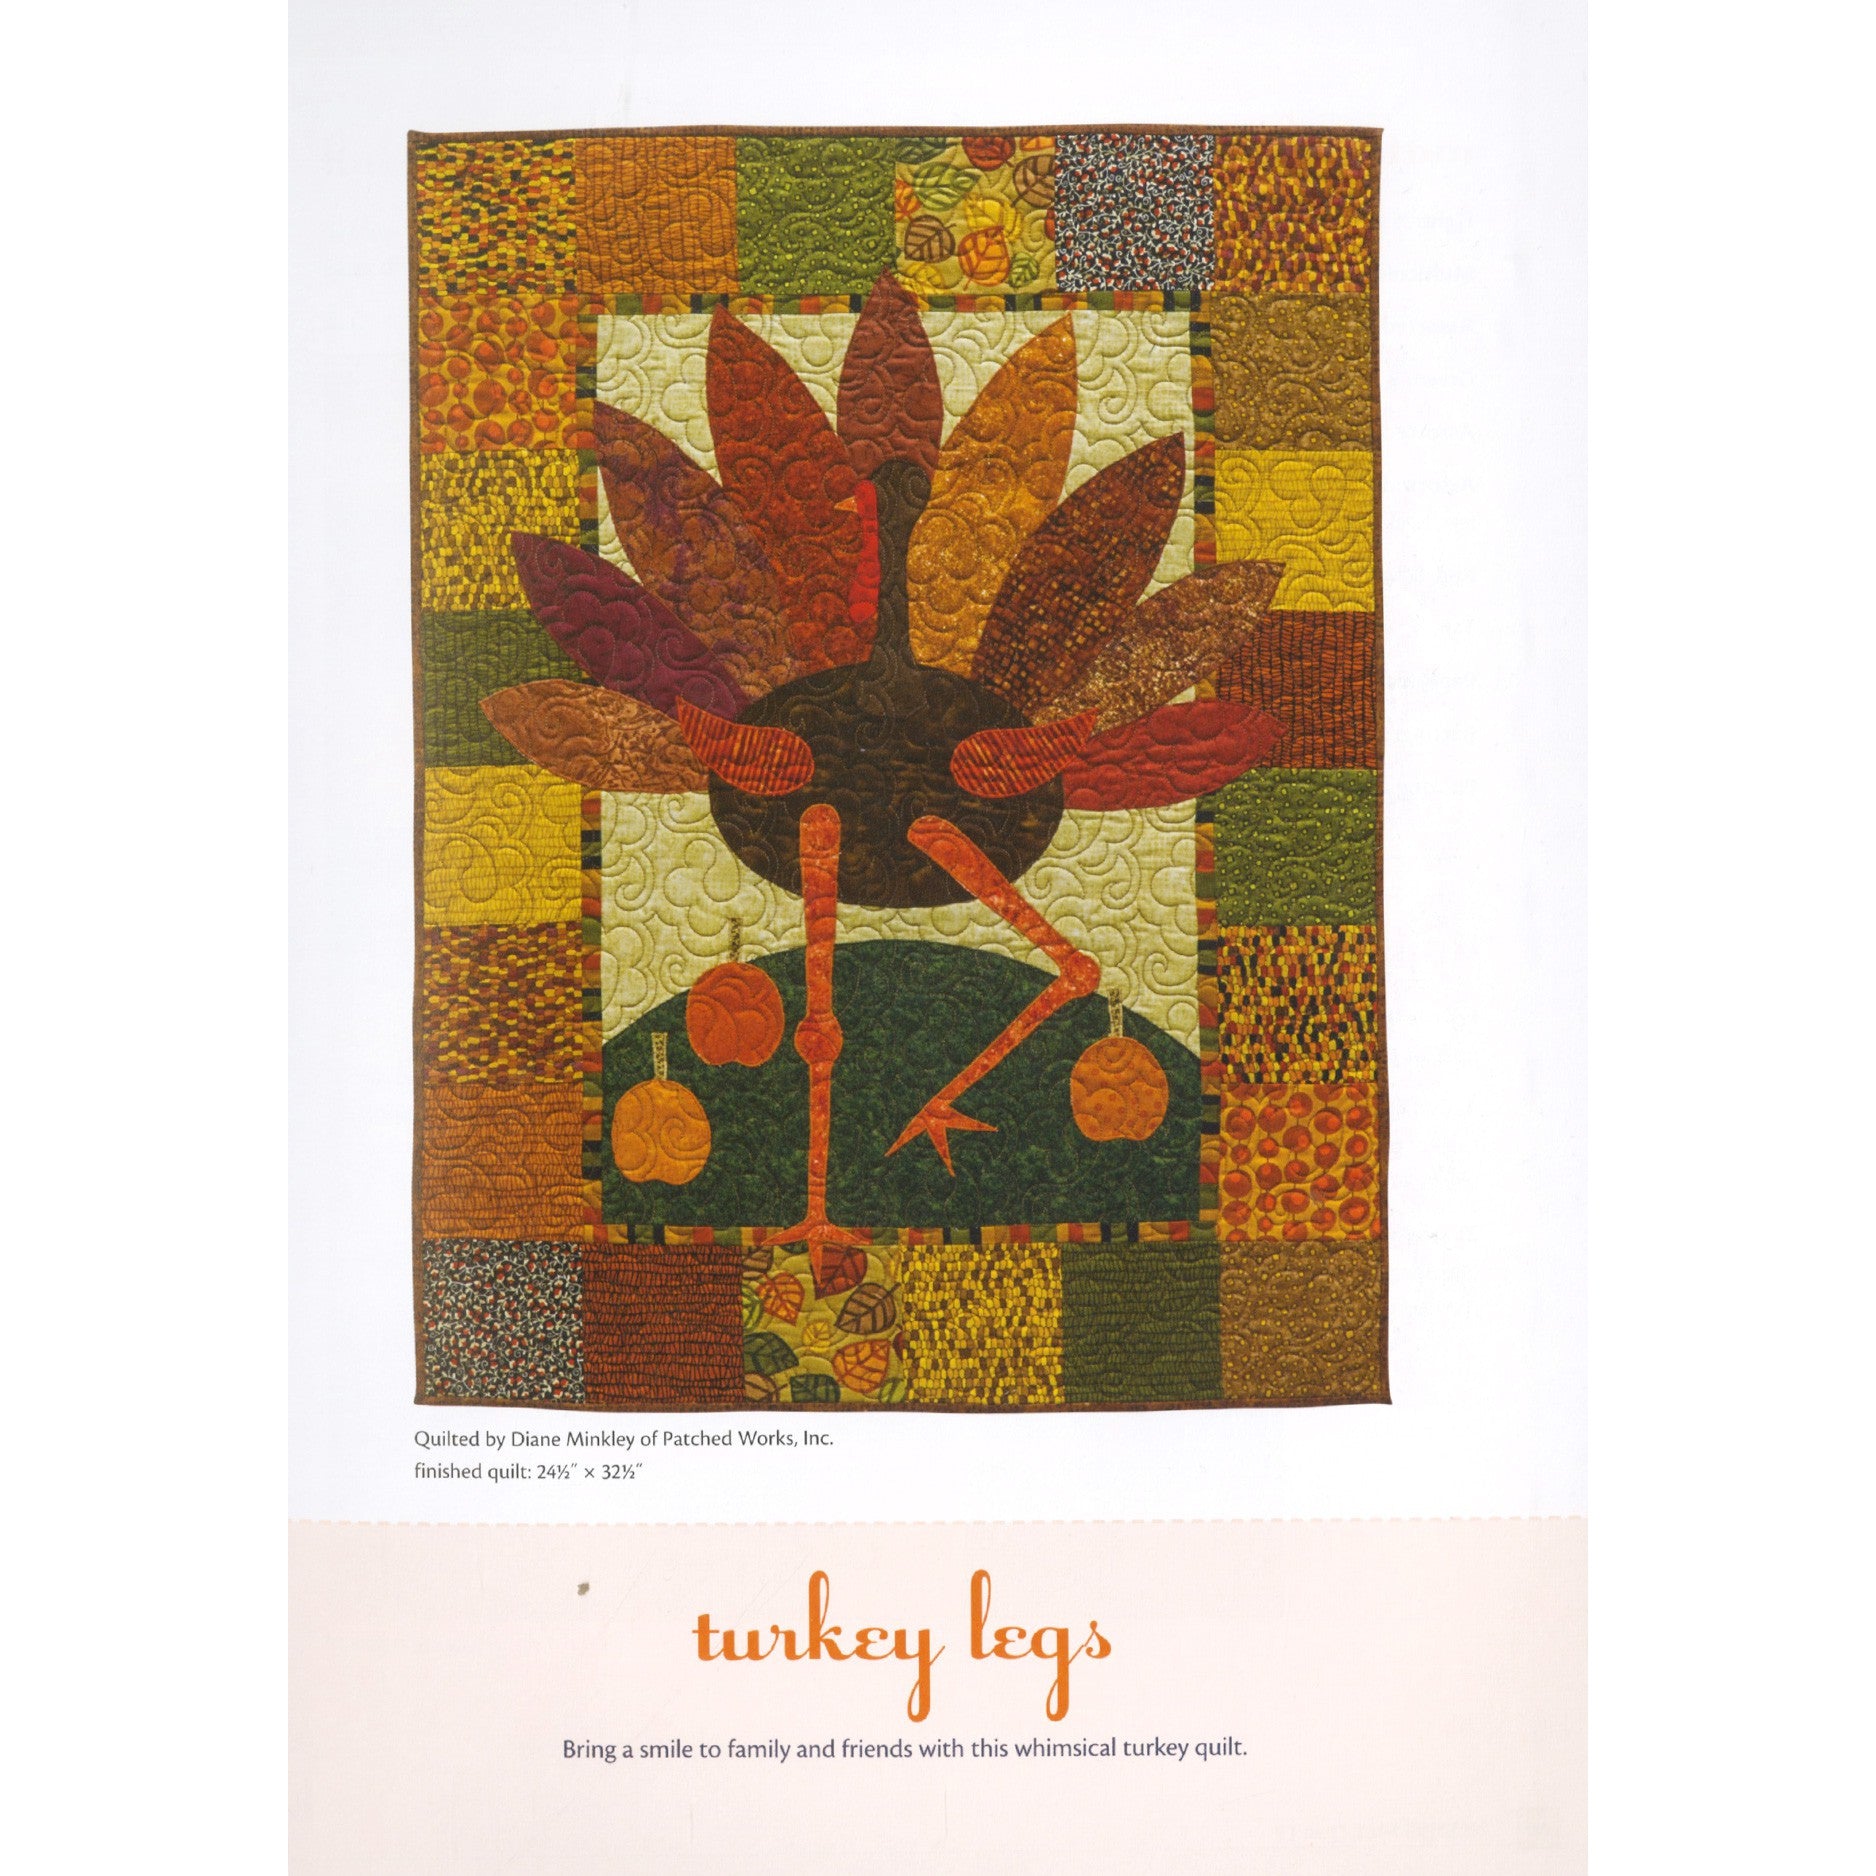 Festive Fall Quilts, Kim Schaefer image # 35356